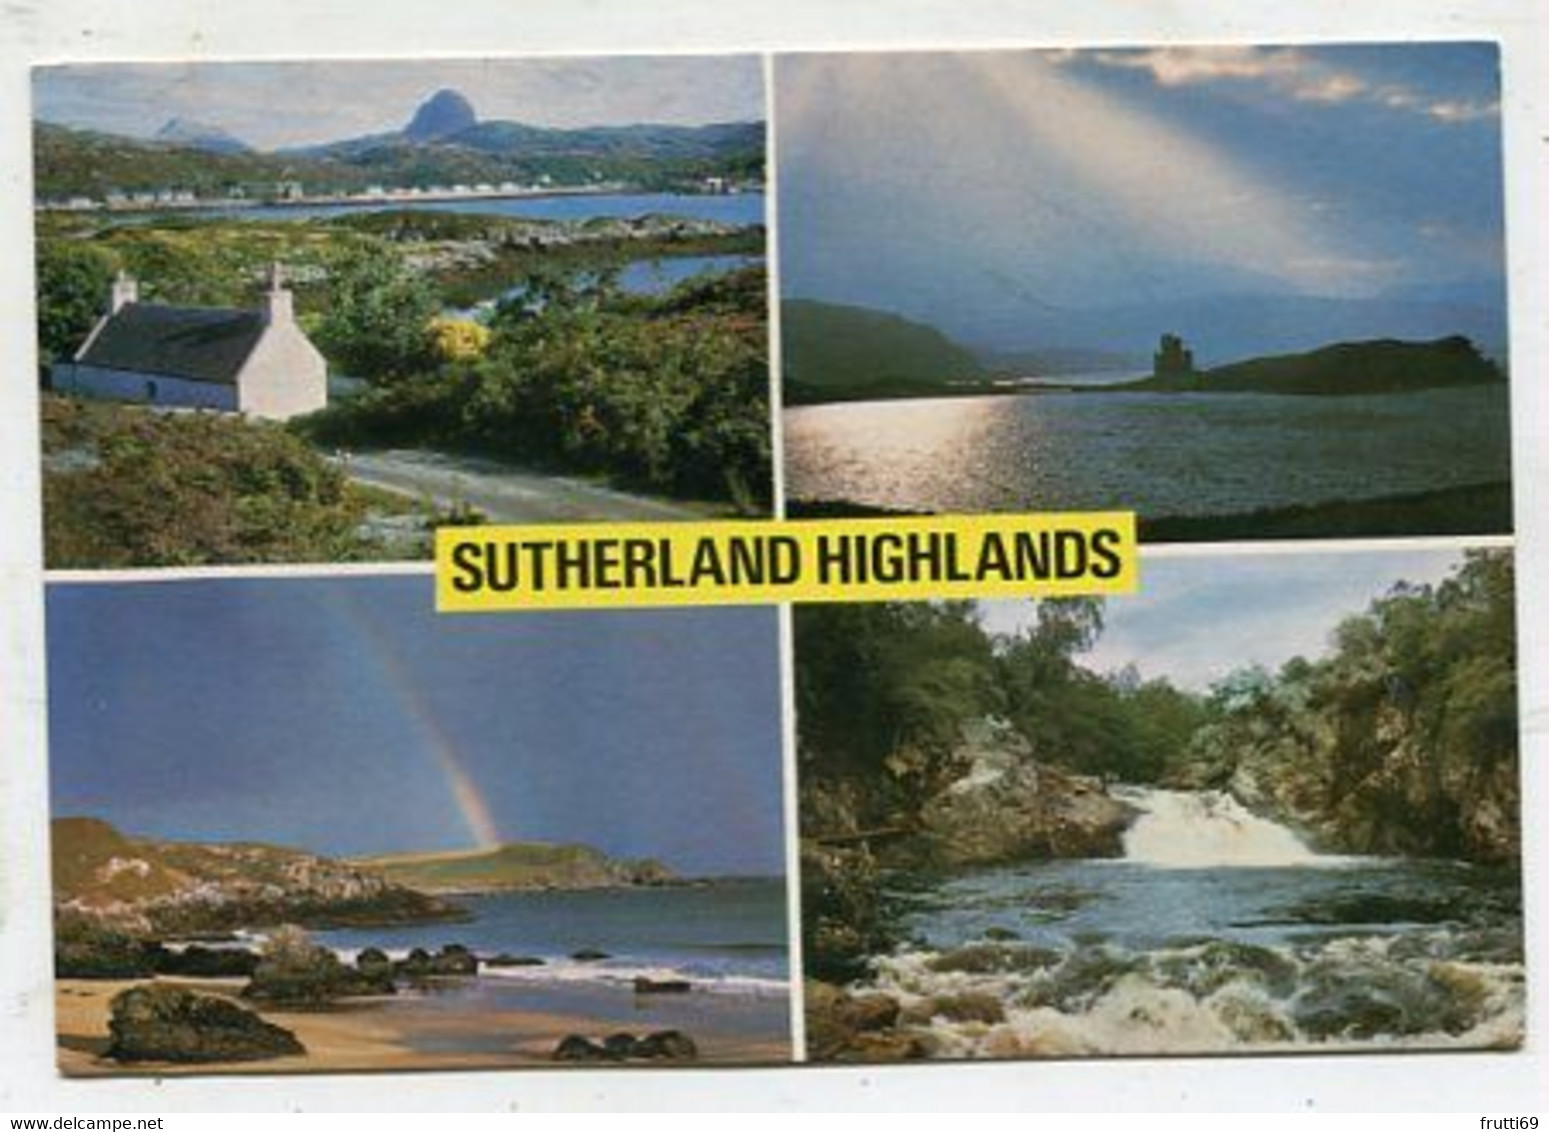 AK 105291 SCOTLAND - Sutherland Highlands - Sutherland